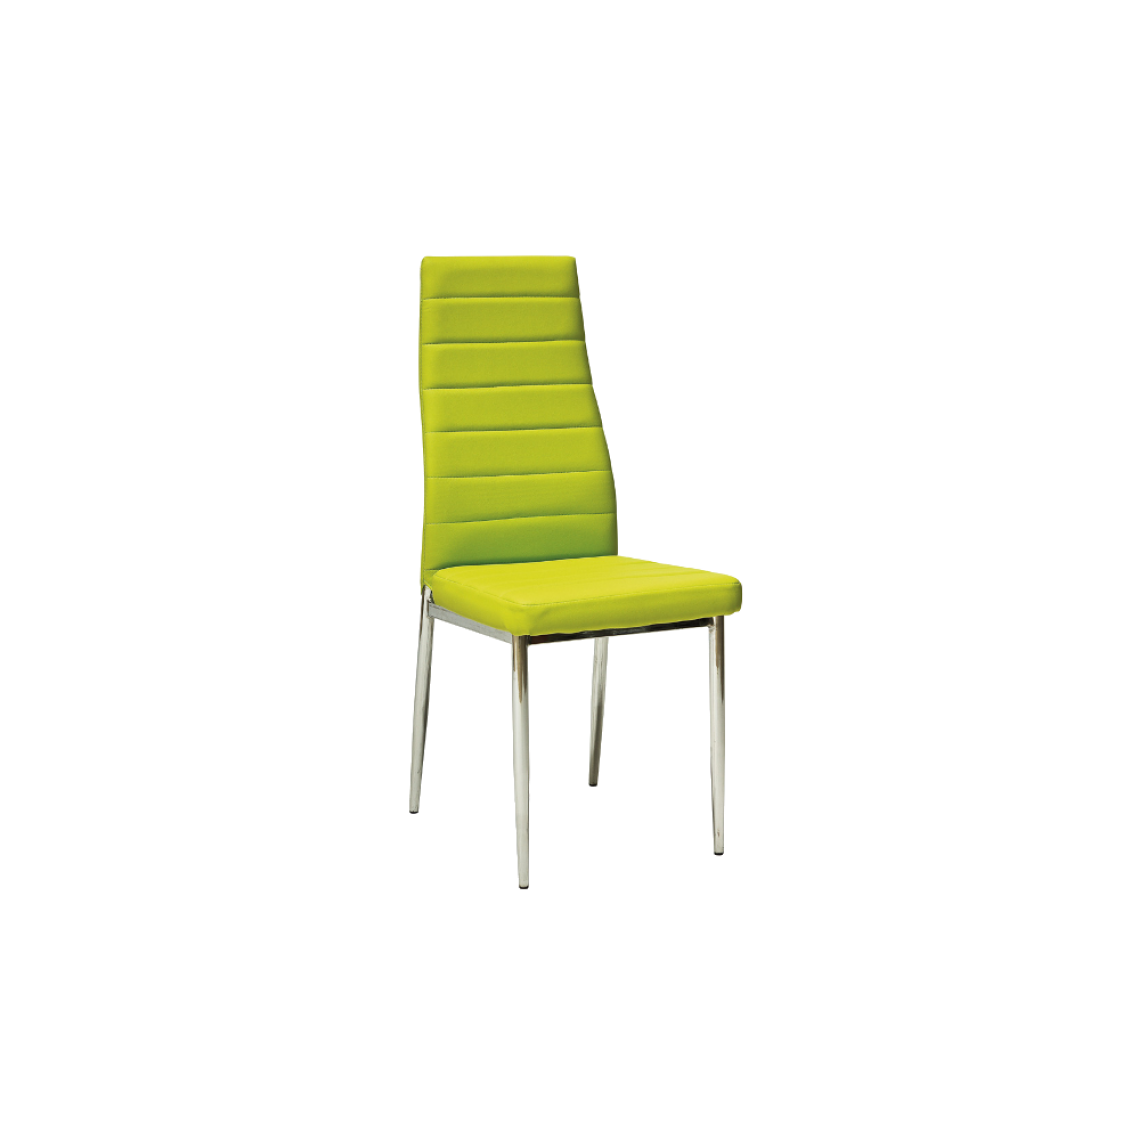 Ac-Deco - Chaise moderne - H261 - 40 x 38 x 96 cm - Cadre chromé - Vert - Chaises